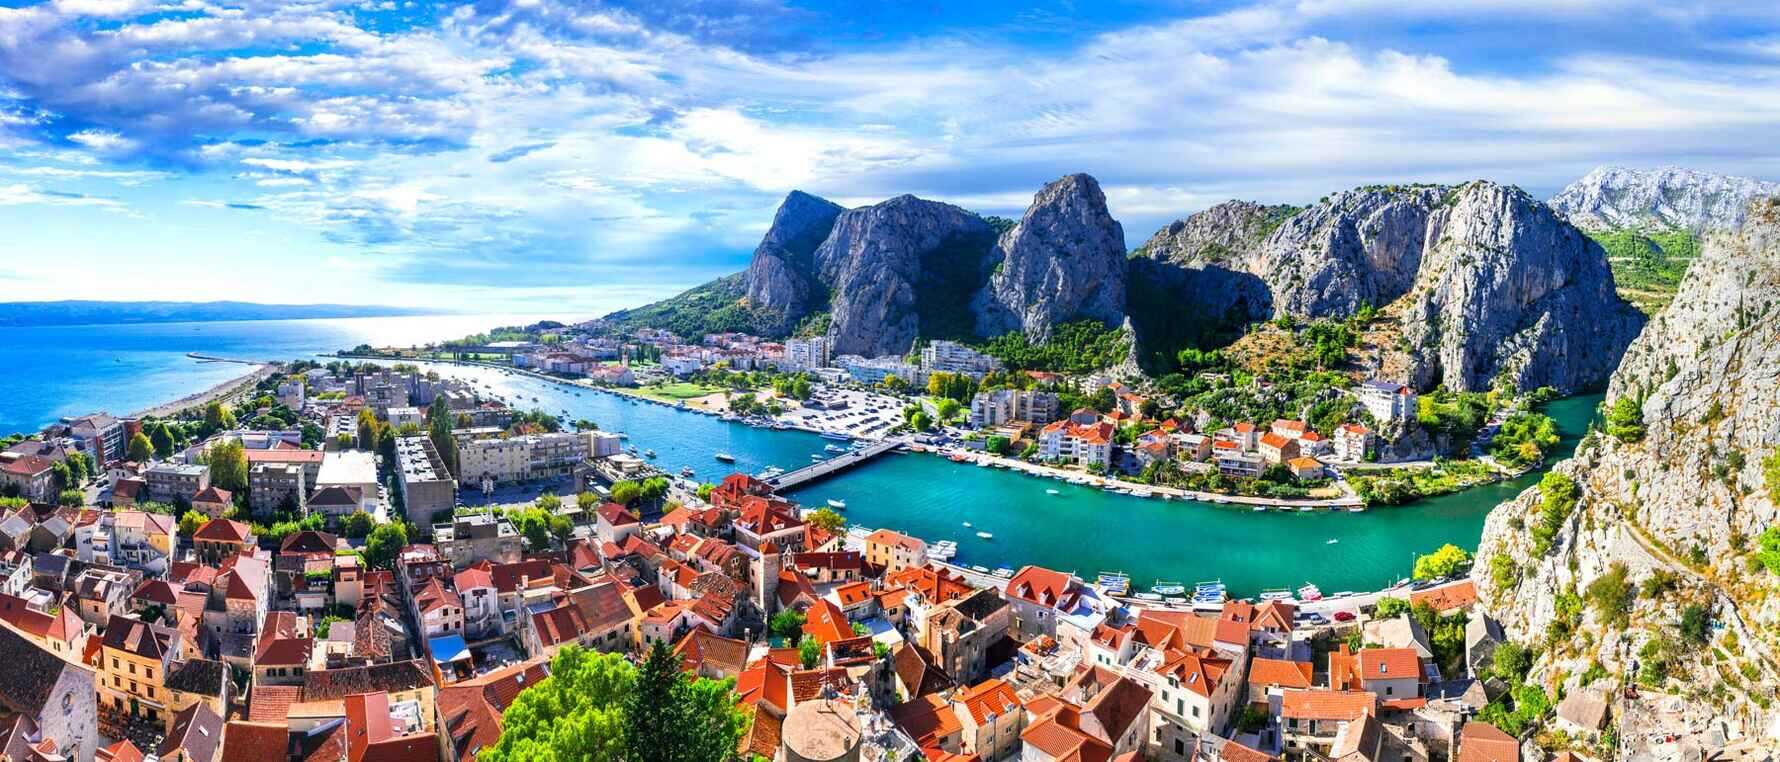 Stunning view of Omis in Croatia